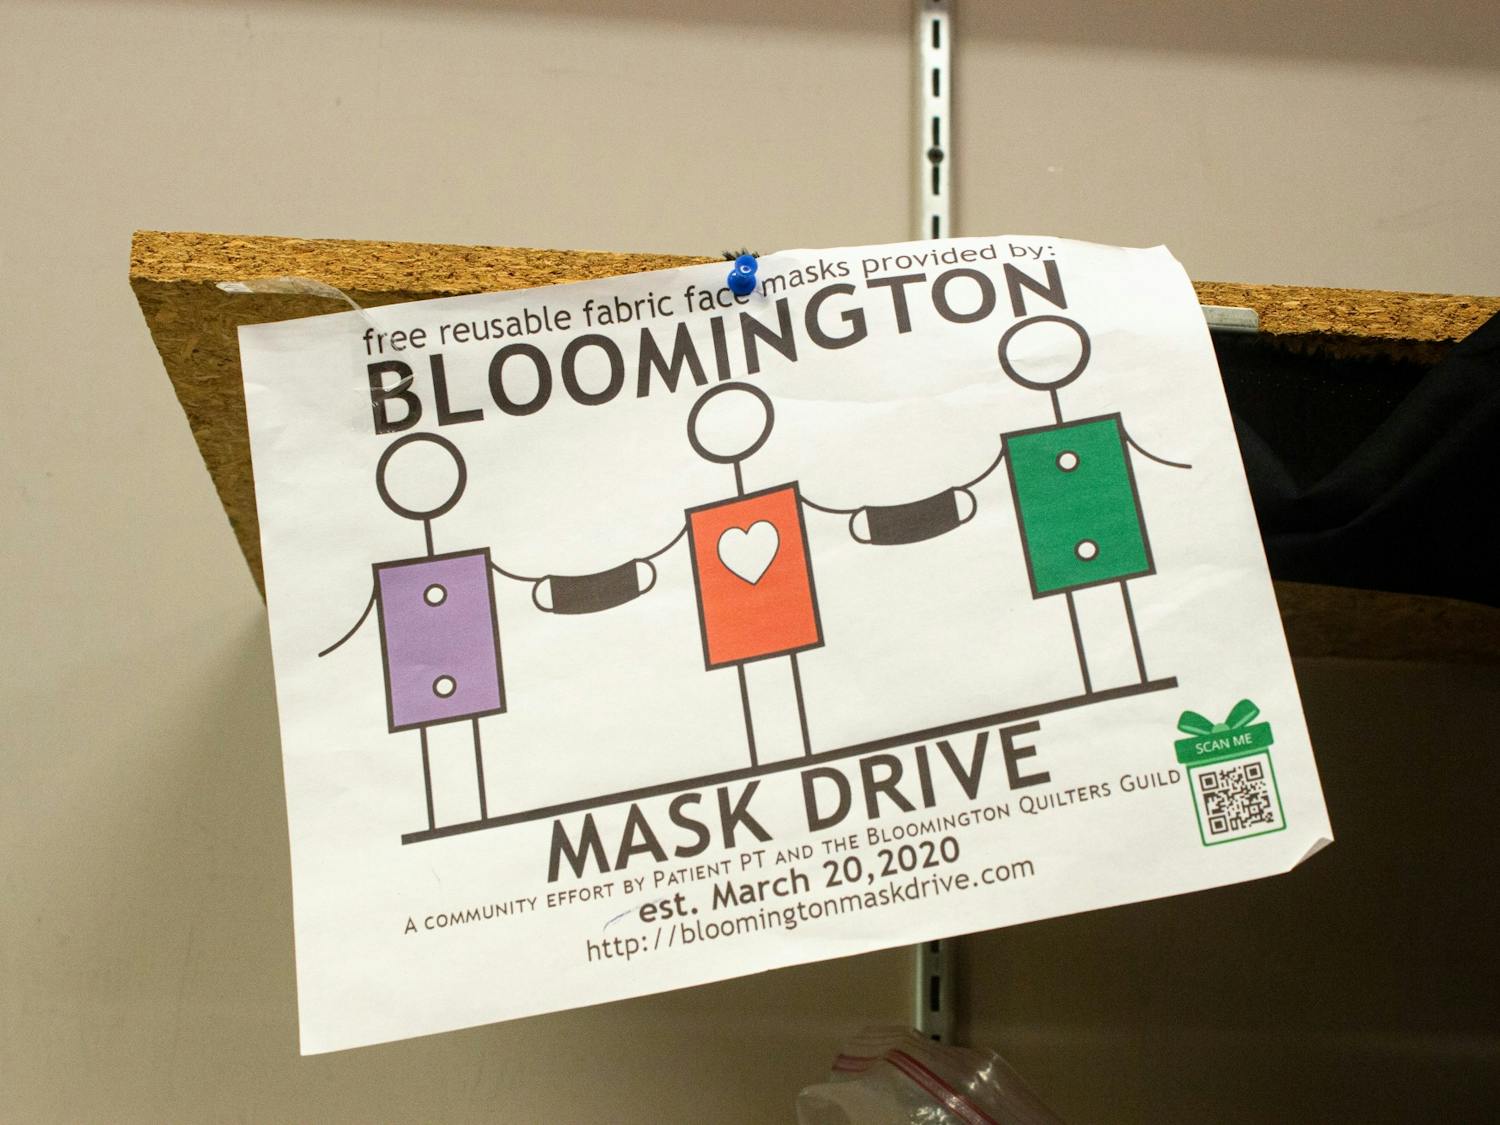 PHOTOS: Bloomington Mask Drive sews, distributes free masks to Bloomington community